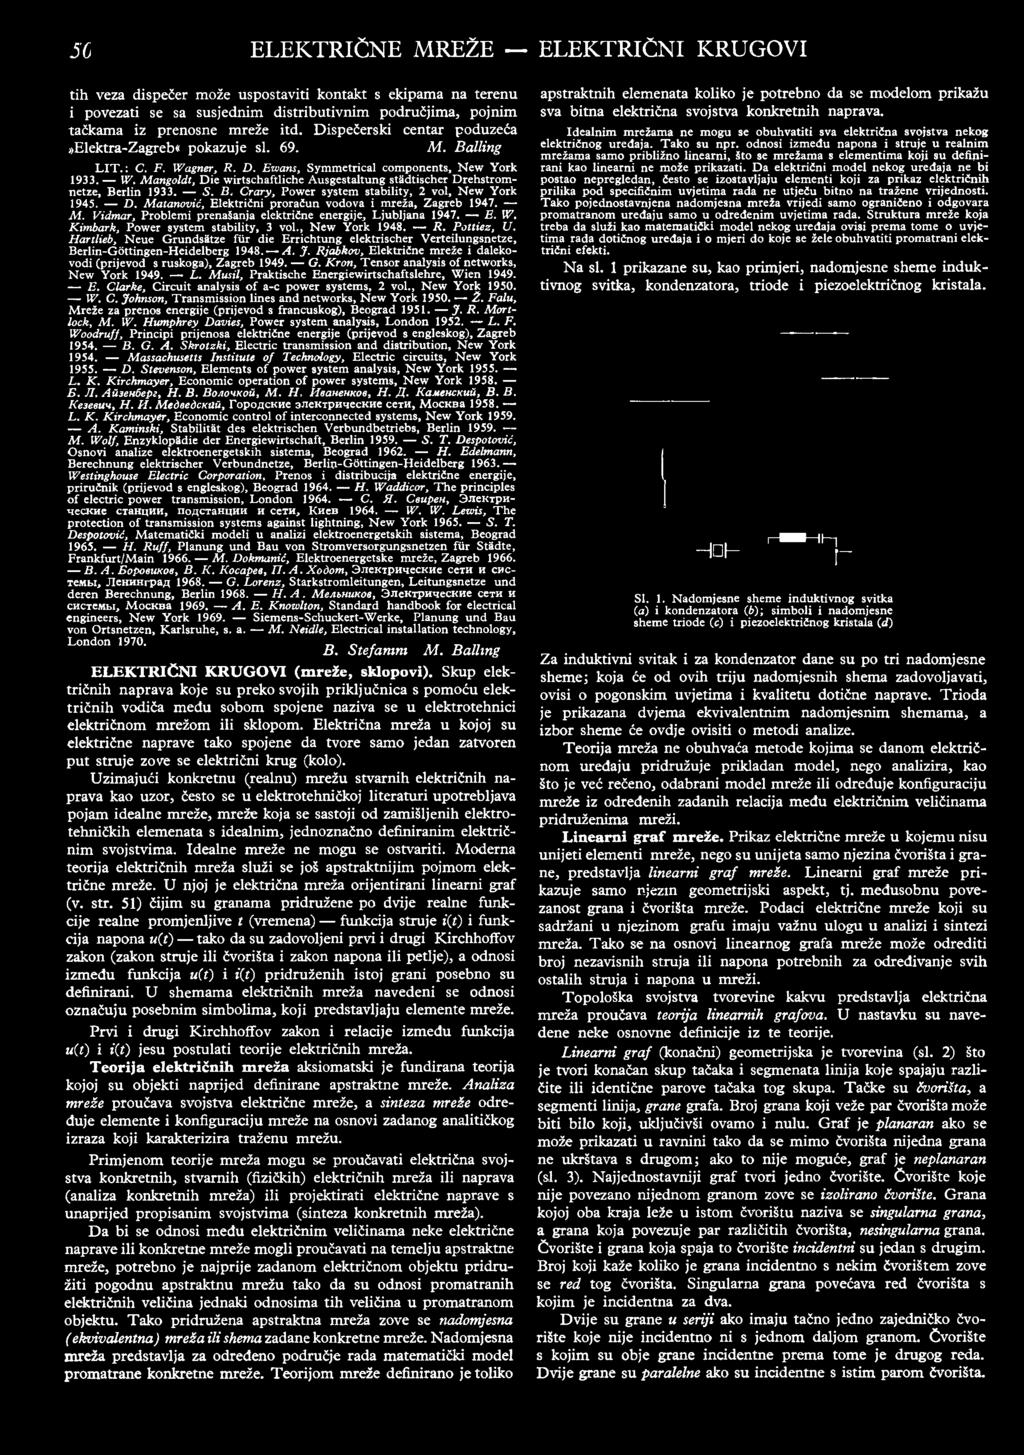 5. В. Crary, Power system stability, 2 vol, New York 1945. D. Matanović, Električni proračun vodova i mreža, Zagreb 1947. M. Vidmar, Problemi prenašanja električne energije, Ljubljana 1947. E. W.